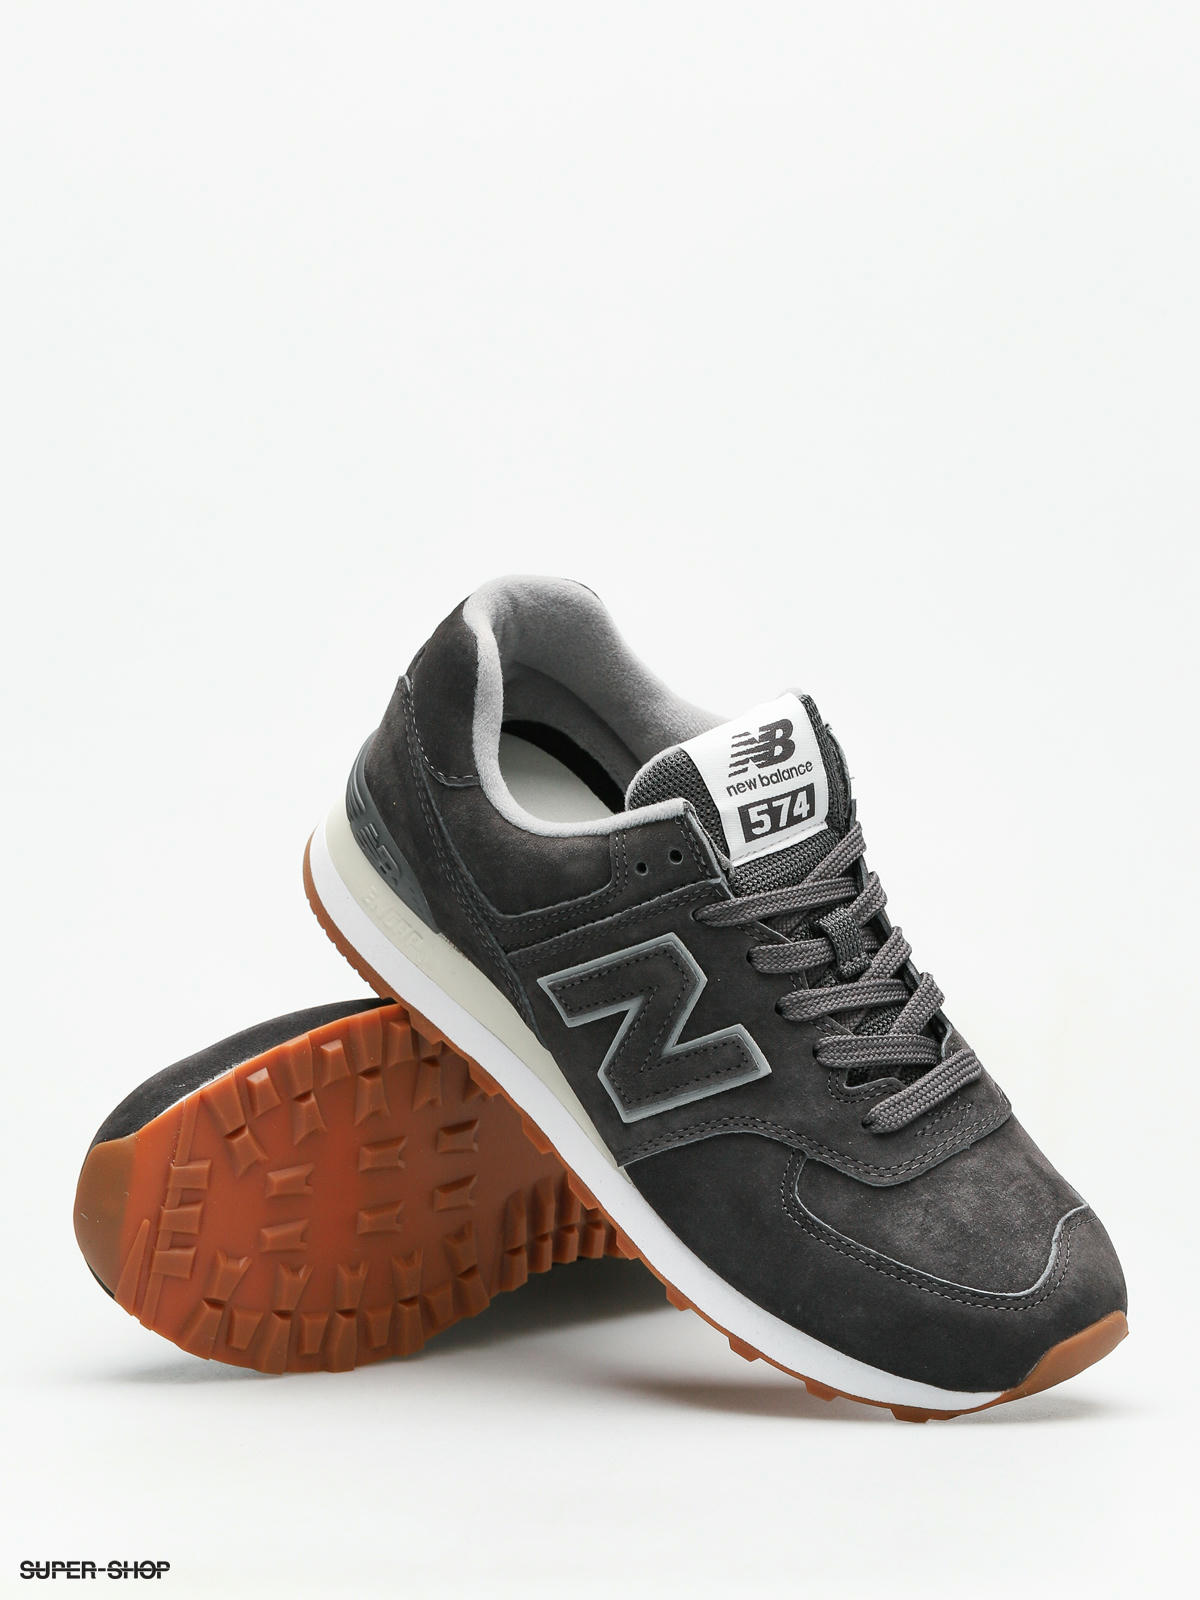 New Balance Shoes 574